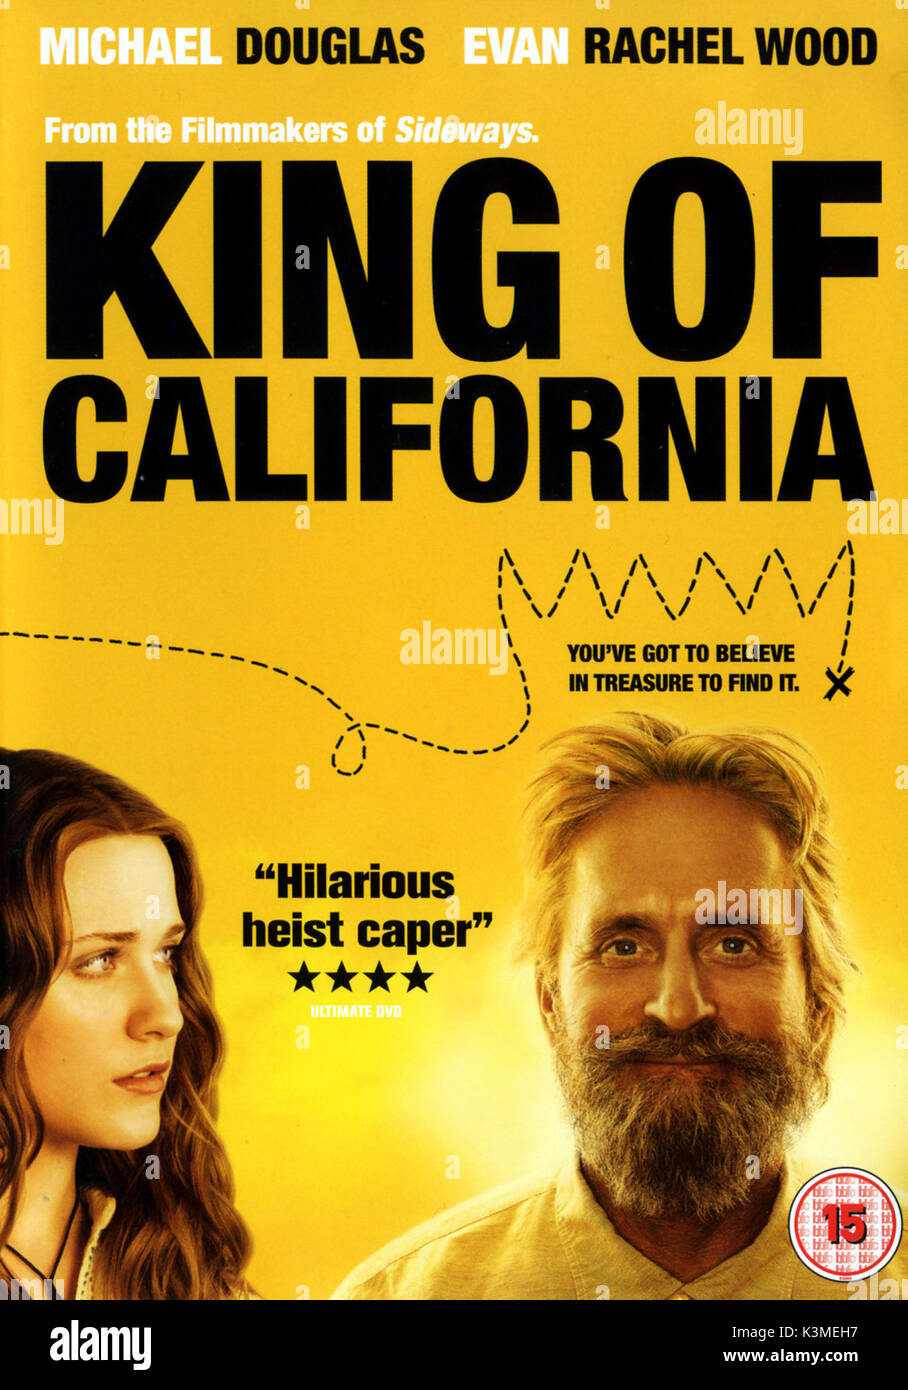 Re della California [US 2007] Evan Rachel Wood, Michael Douglas data: 2007 Foto Stock